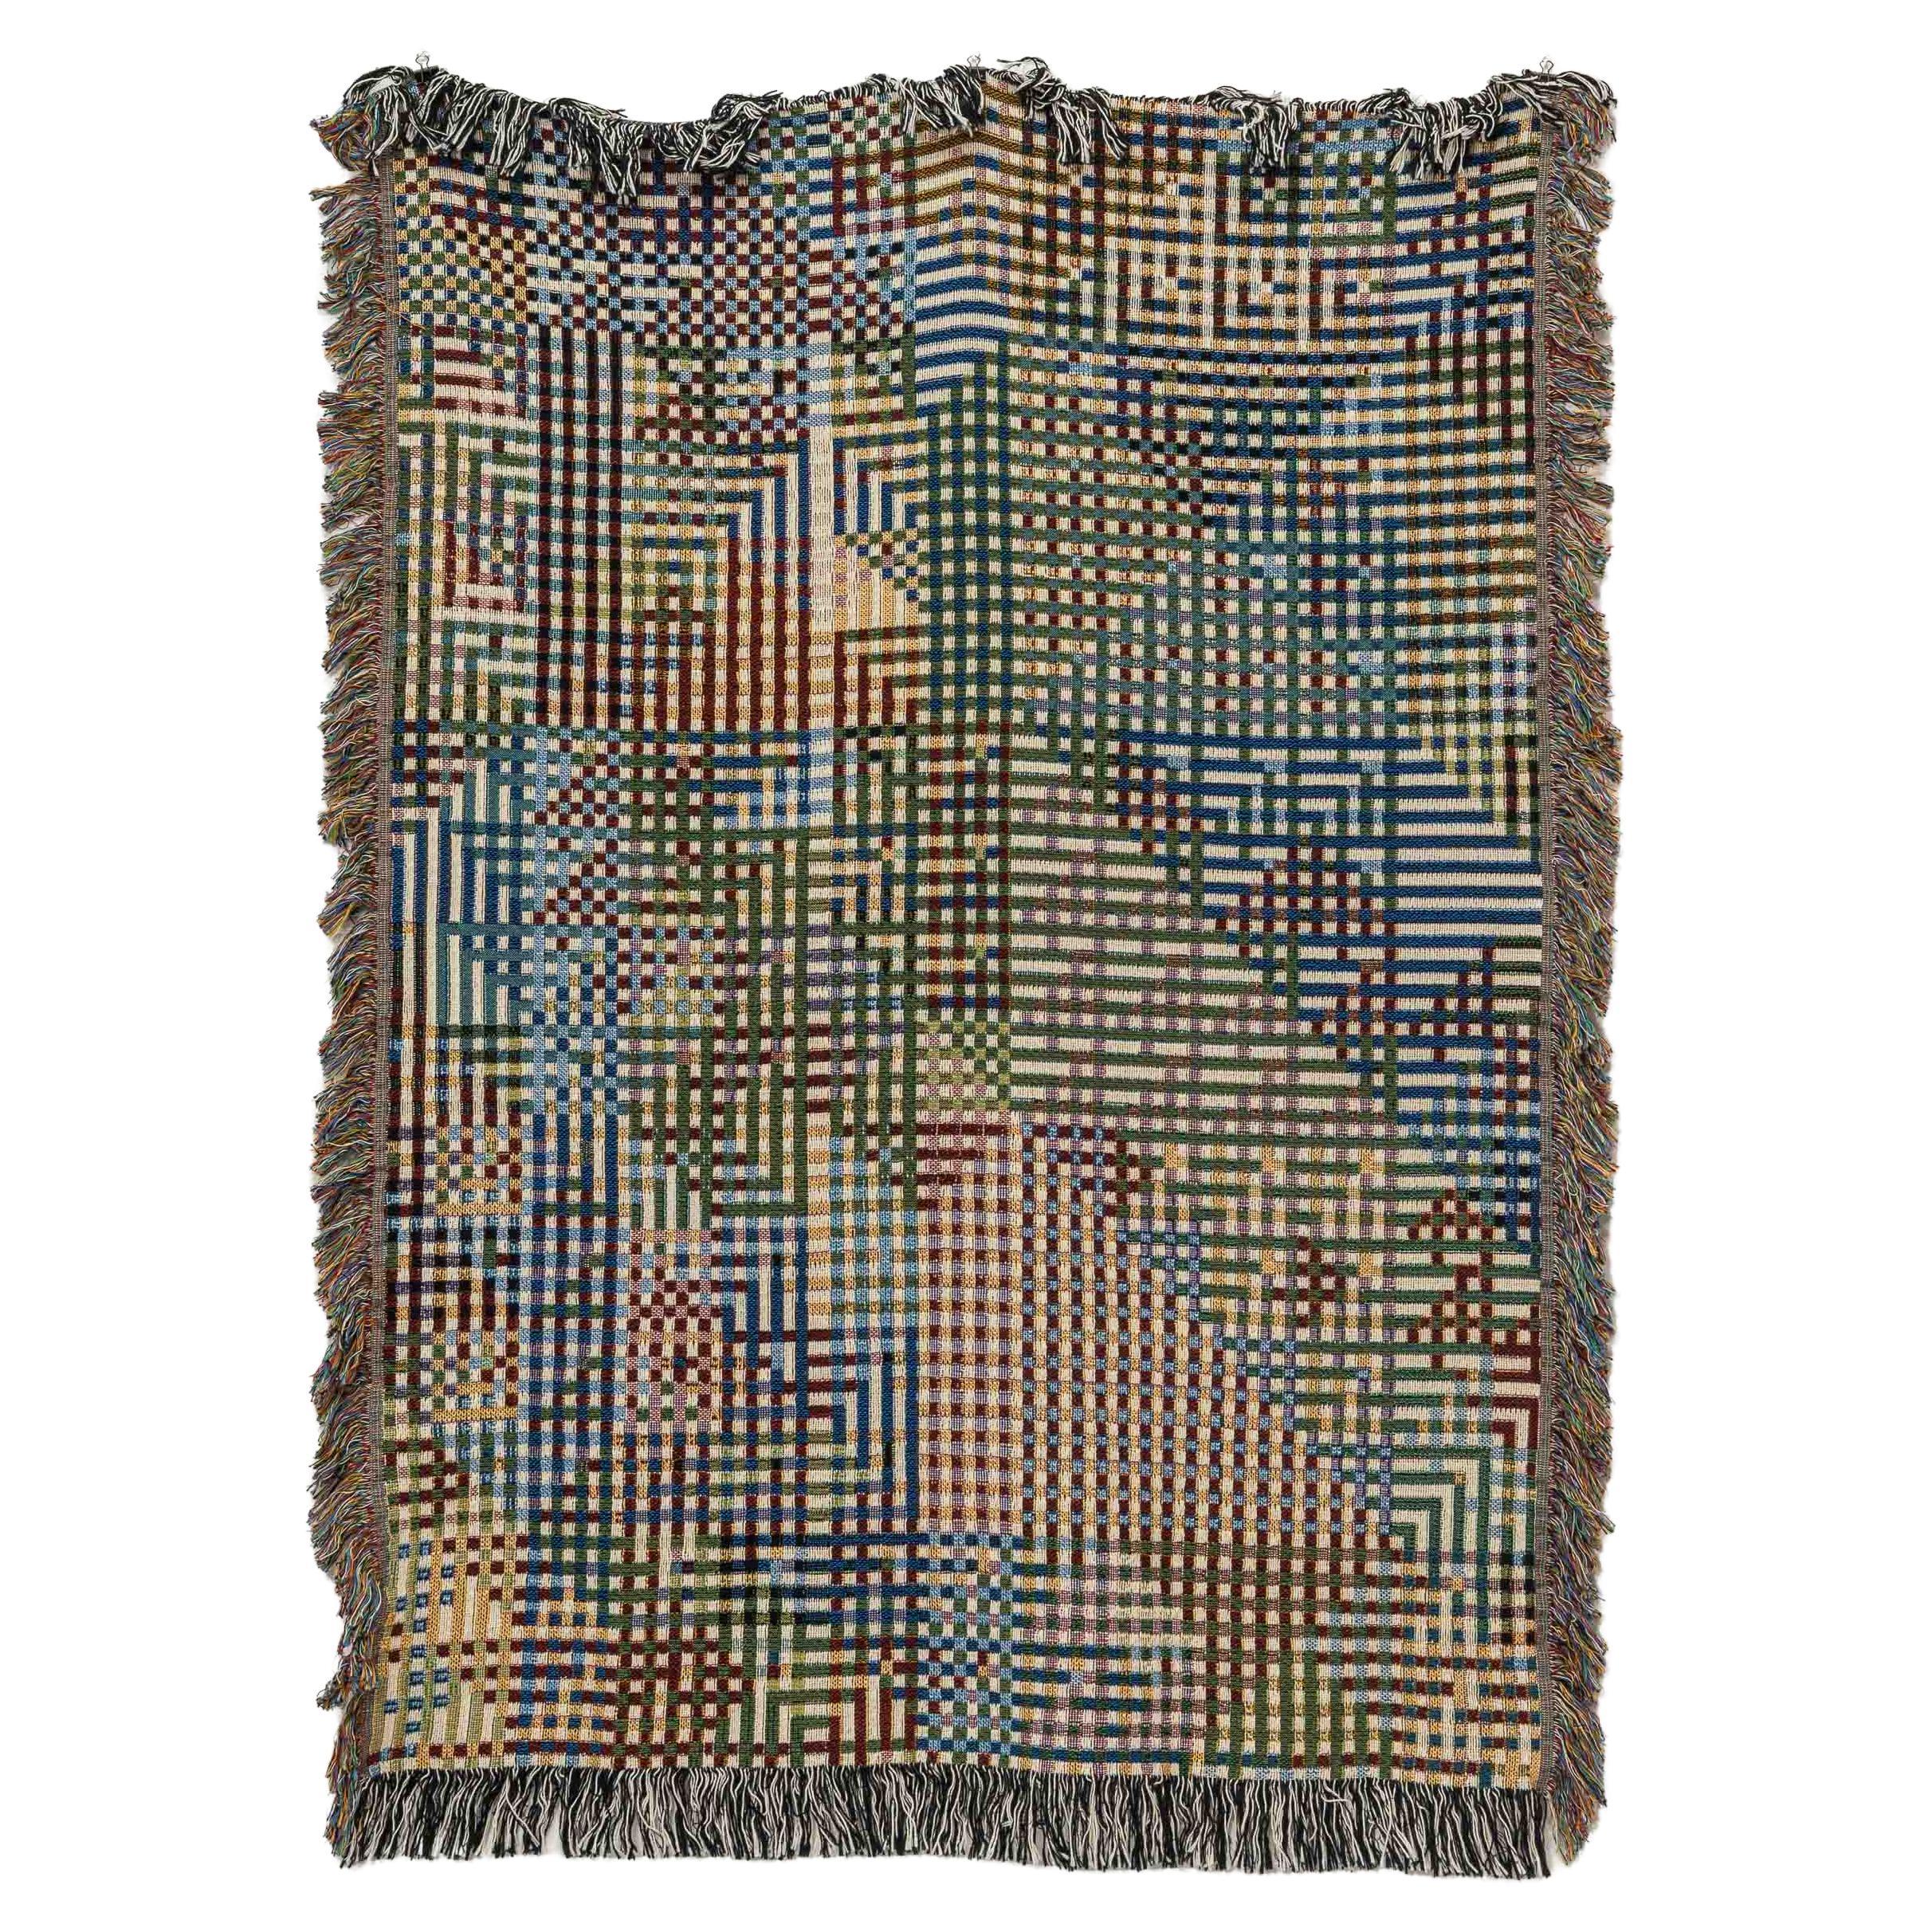 Bit Map Throw Blanket 03, 100% Baumwolle Woven Contemporary Pixel Art, 37 "x52"